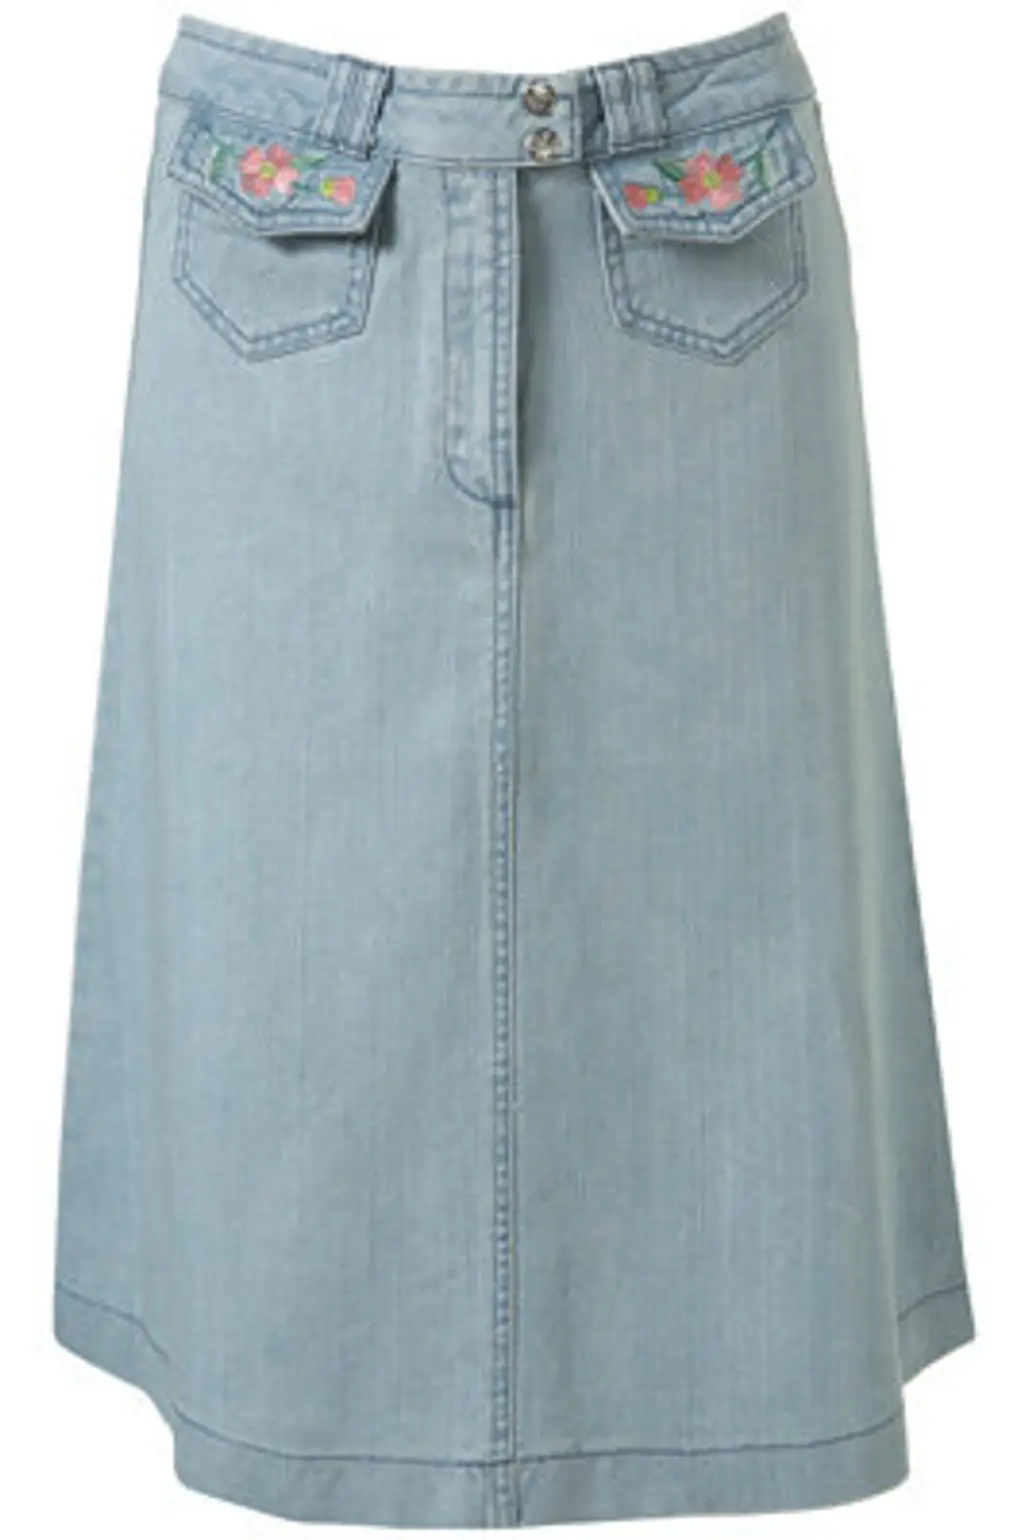 Topshop Pale Blue Denim Flower Embroidery Midi Skirt